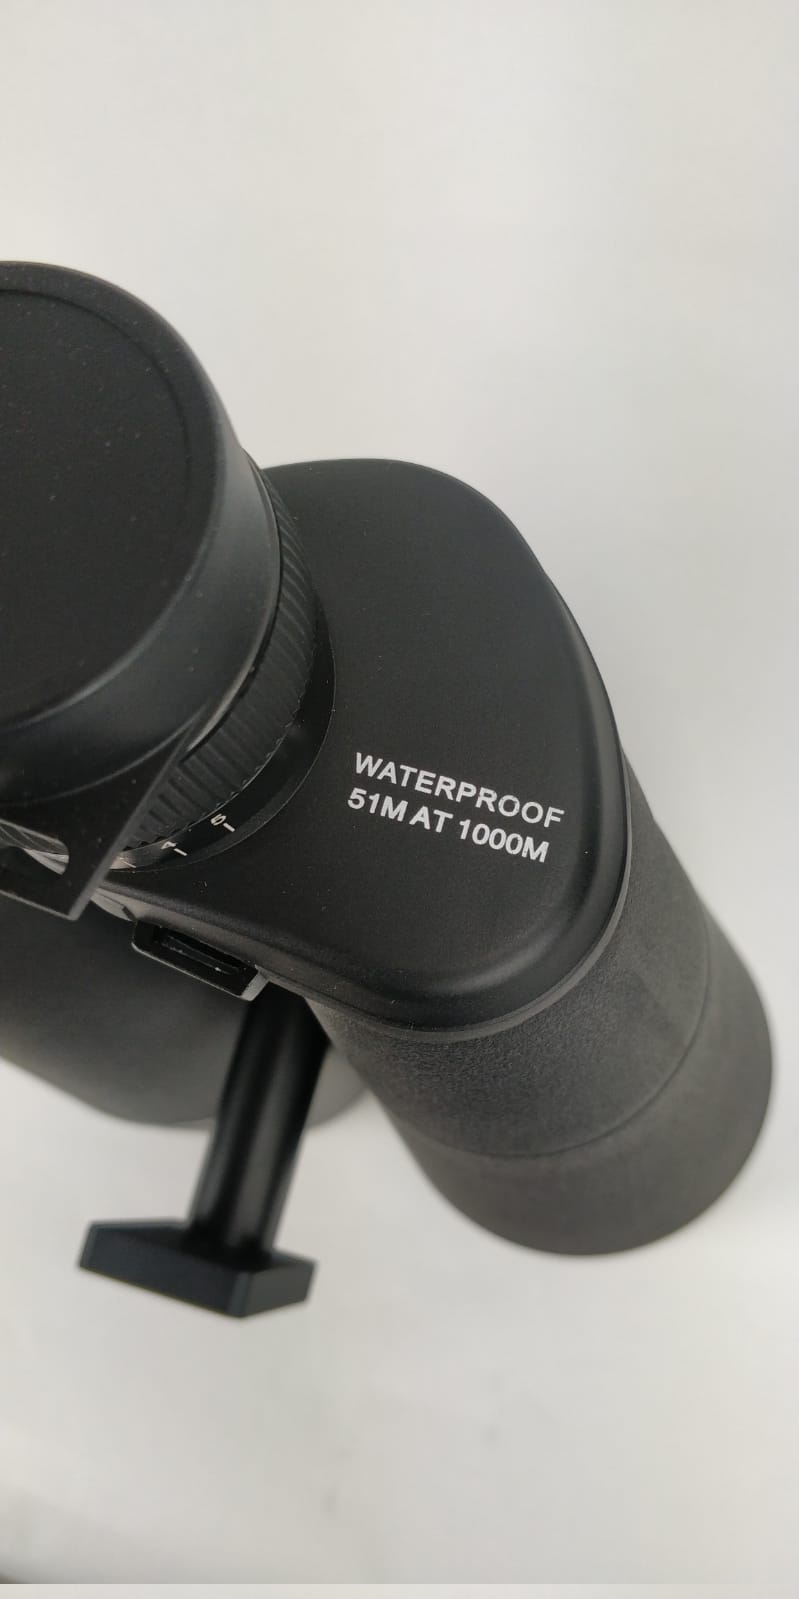  TS-Optics Large 23x110 MX Binoculars with Tripod Adapter, nitrogen-purged, rubber armoured [EN] Usato ottime condizioni 